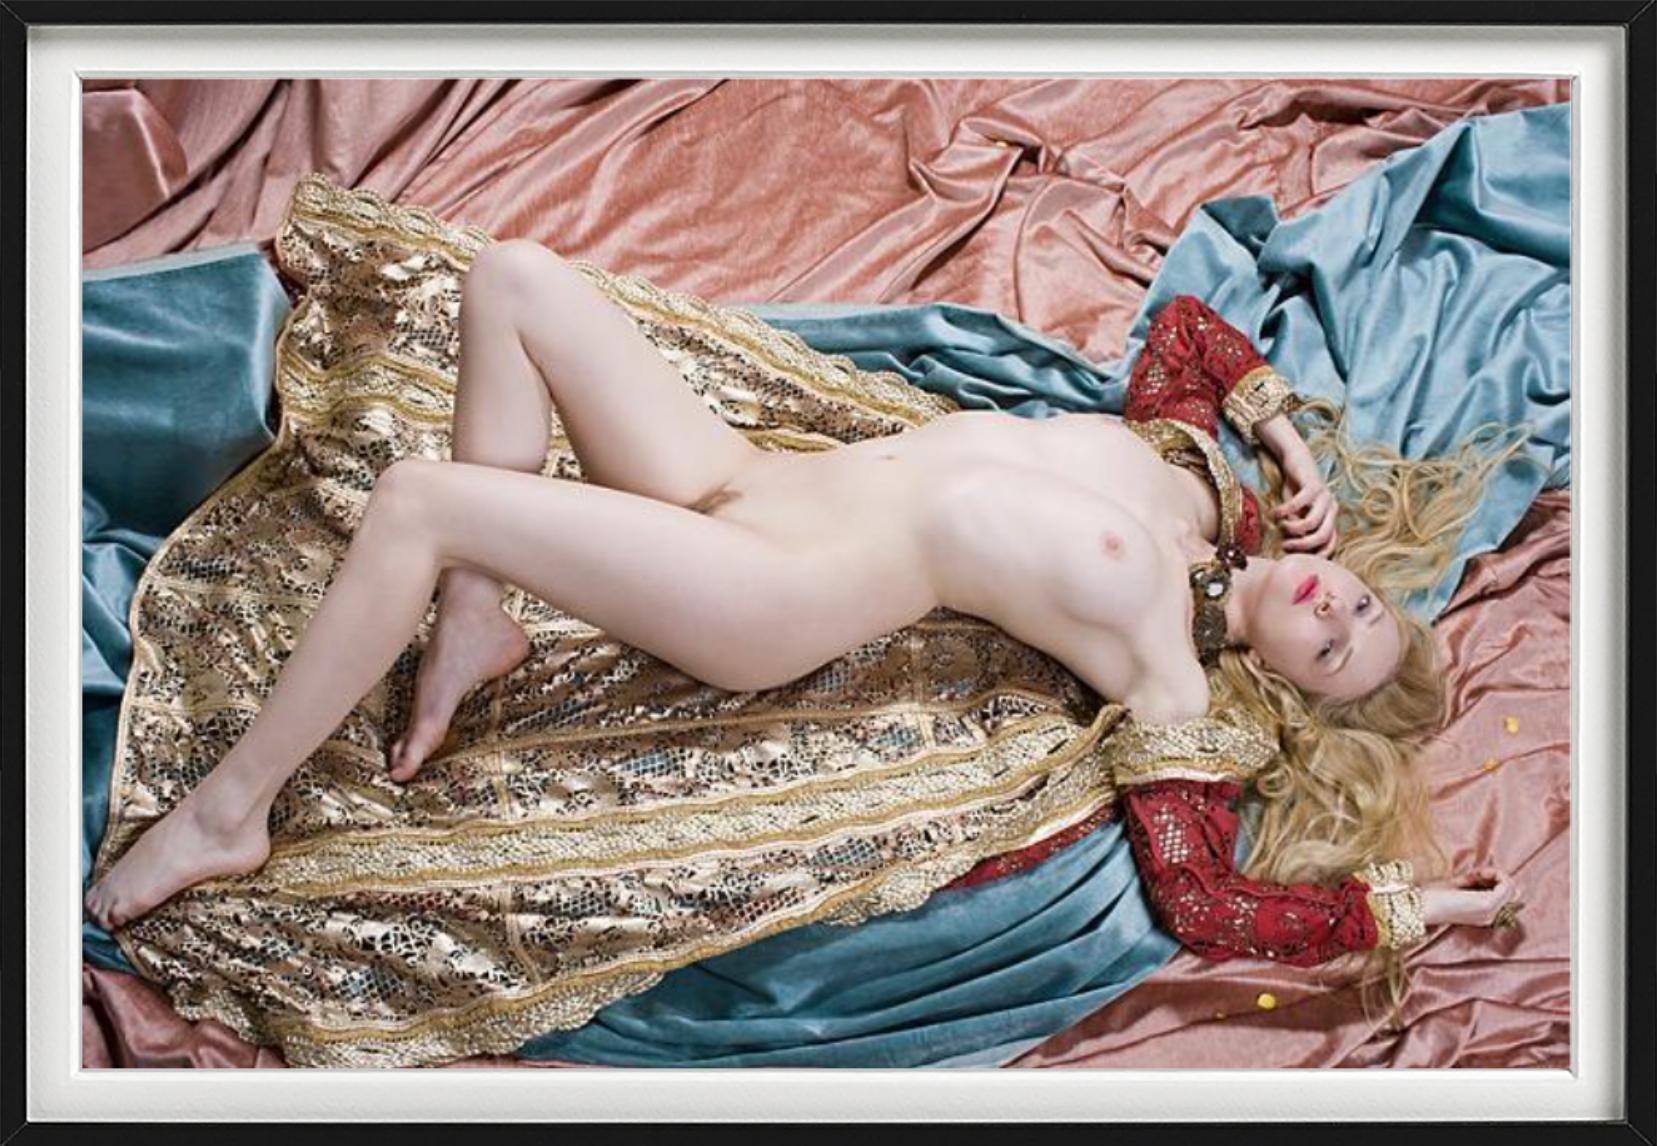 Lying Nude, NYC - nude model between fabrics, fine art photography, 2007 - Contemporary Photograph by Iris Brosch